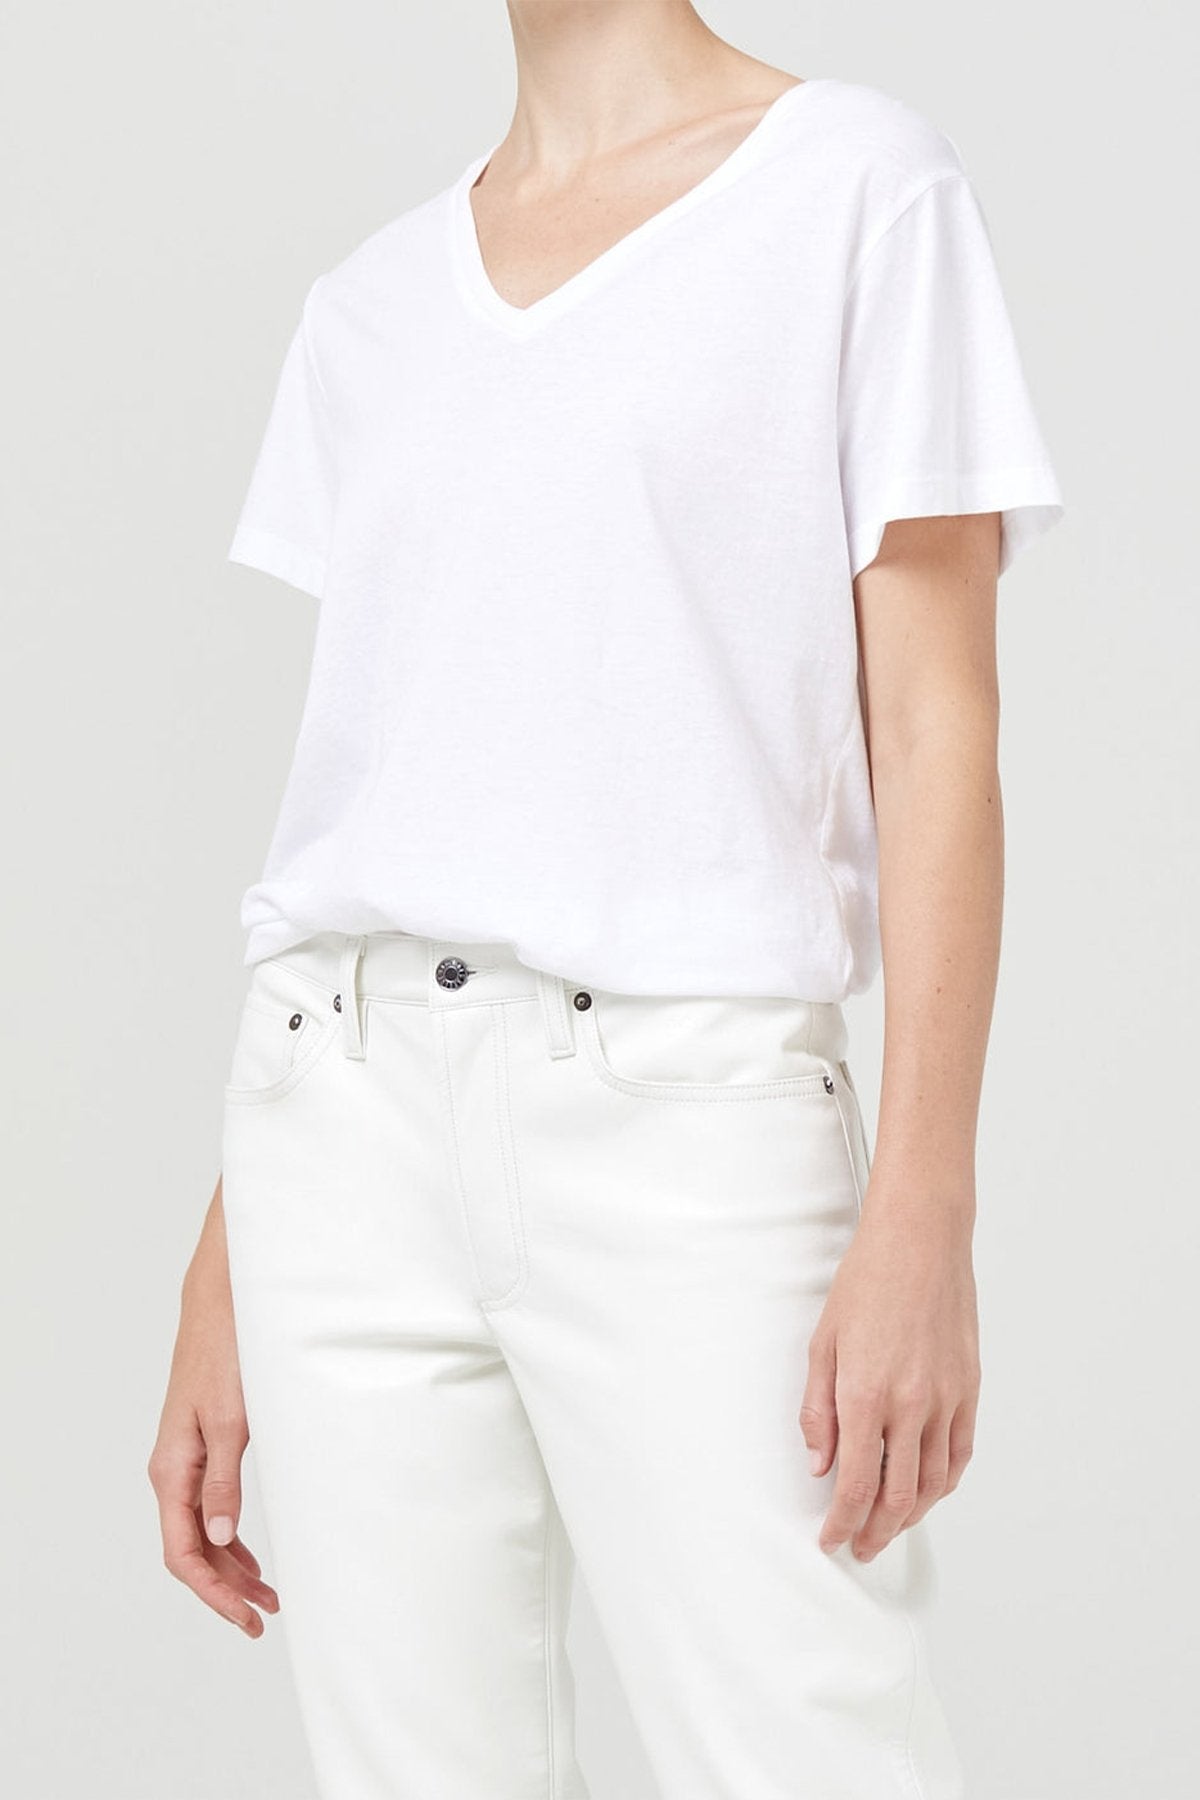 Ona T-Shirt in White - shop-olivia.com